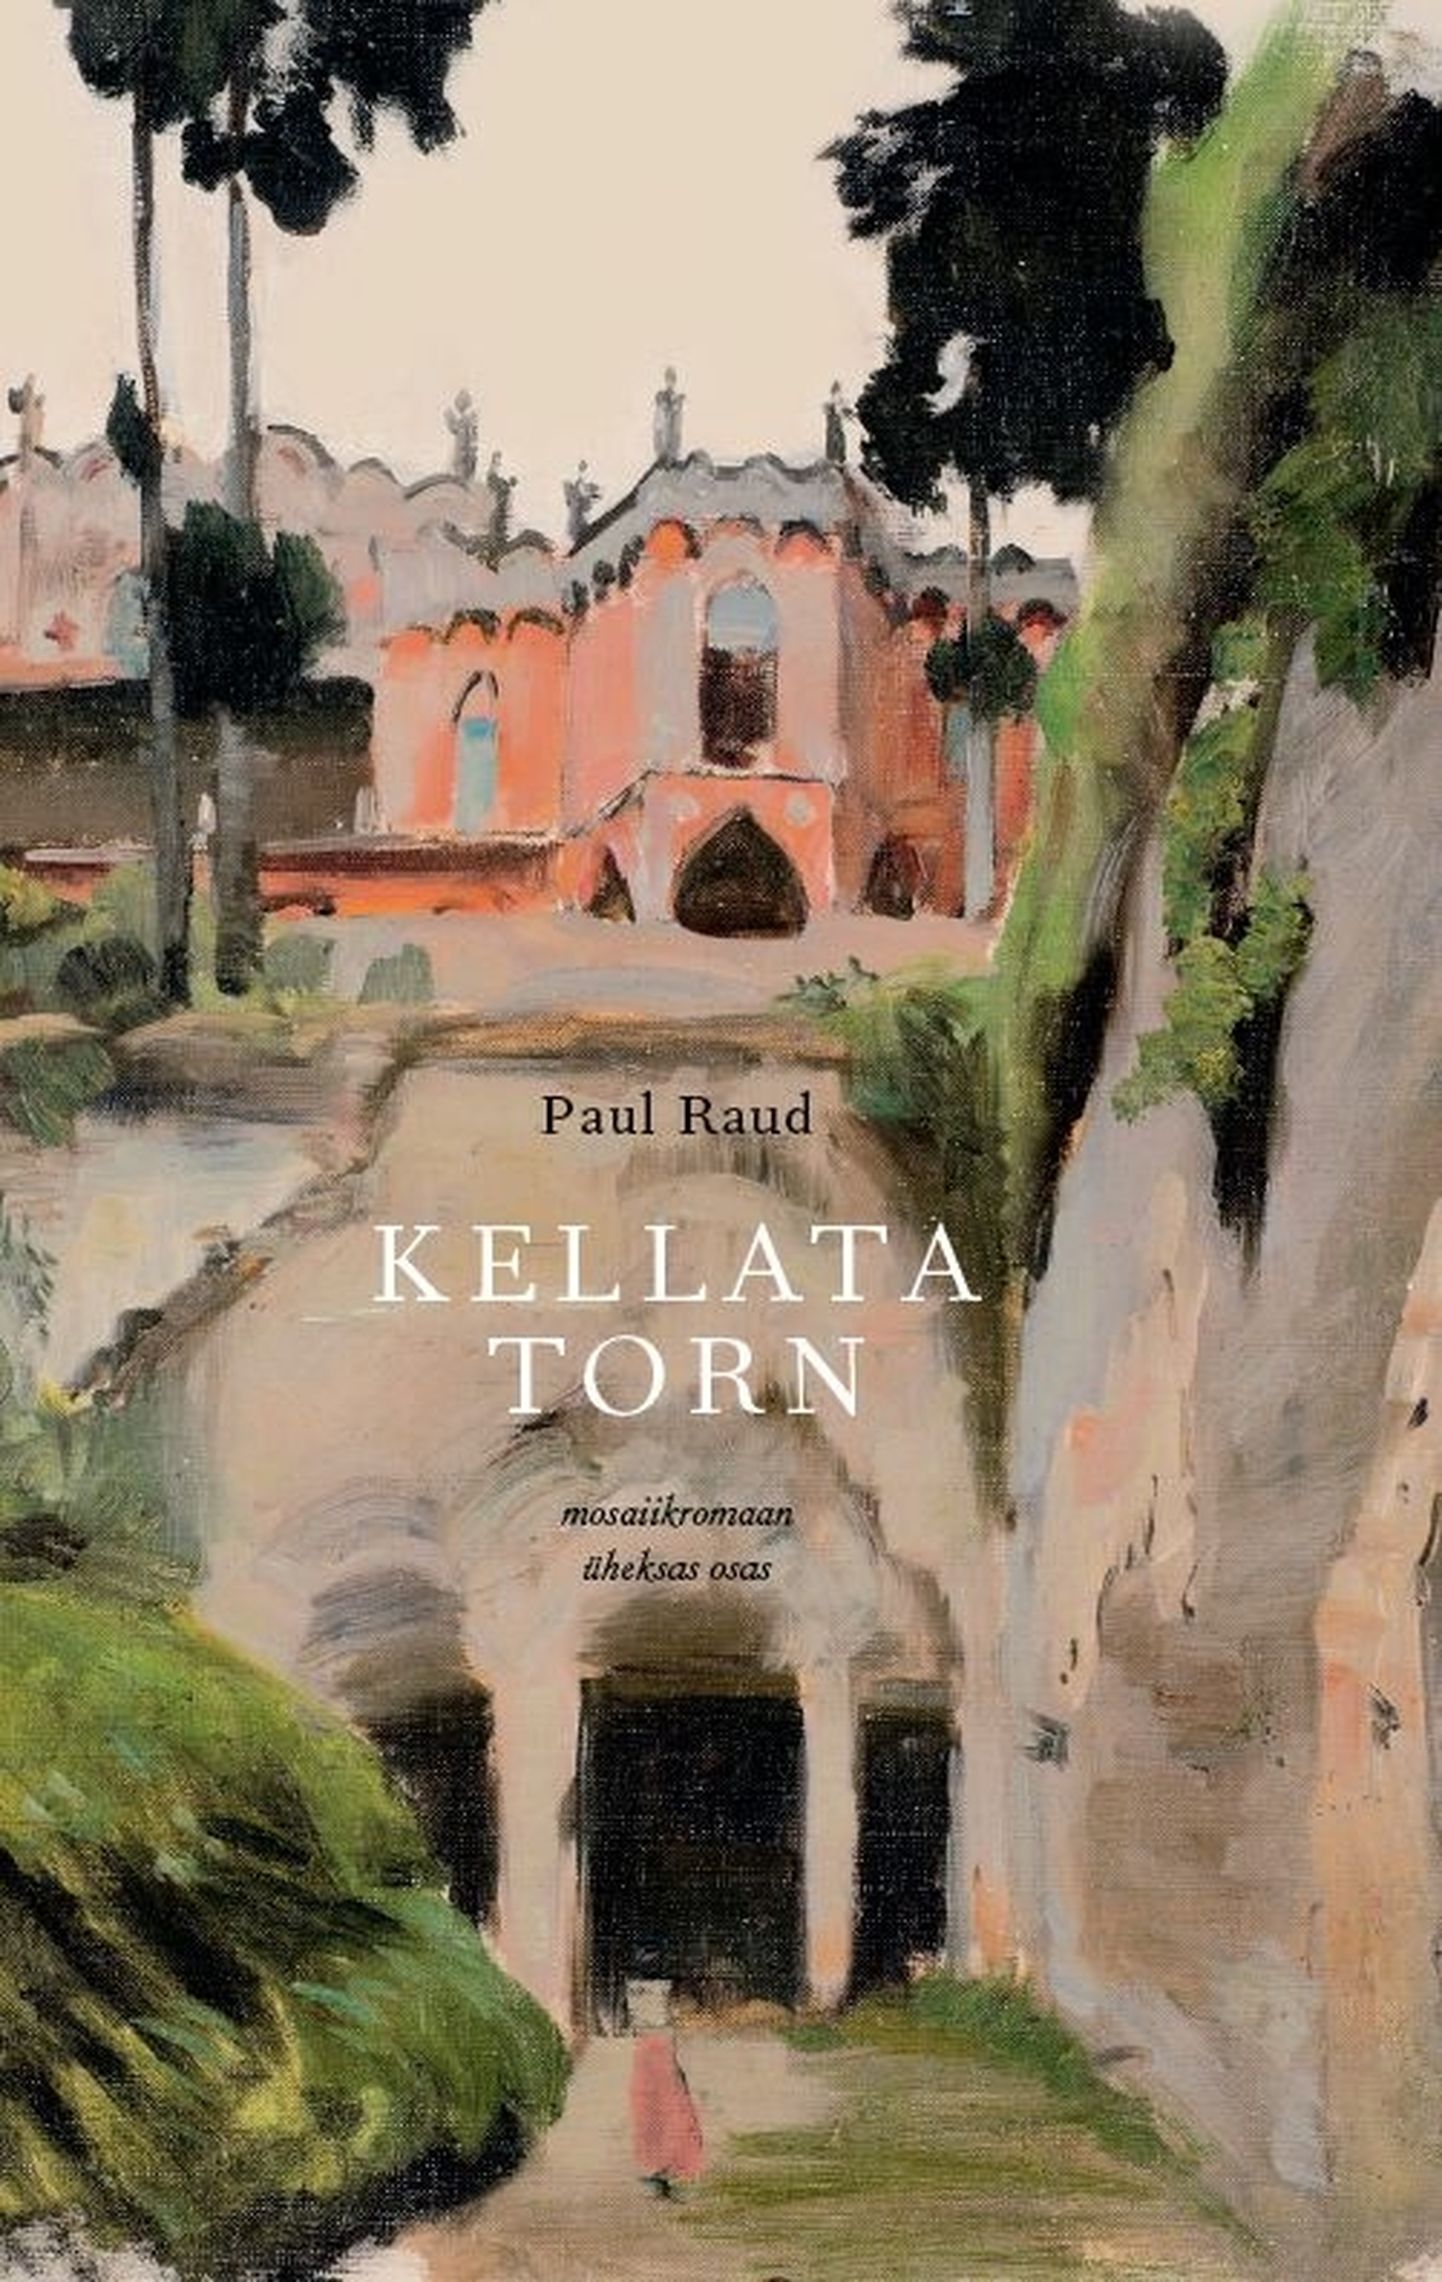 Paul Raua mosaiikromaan «Kellata torn».